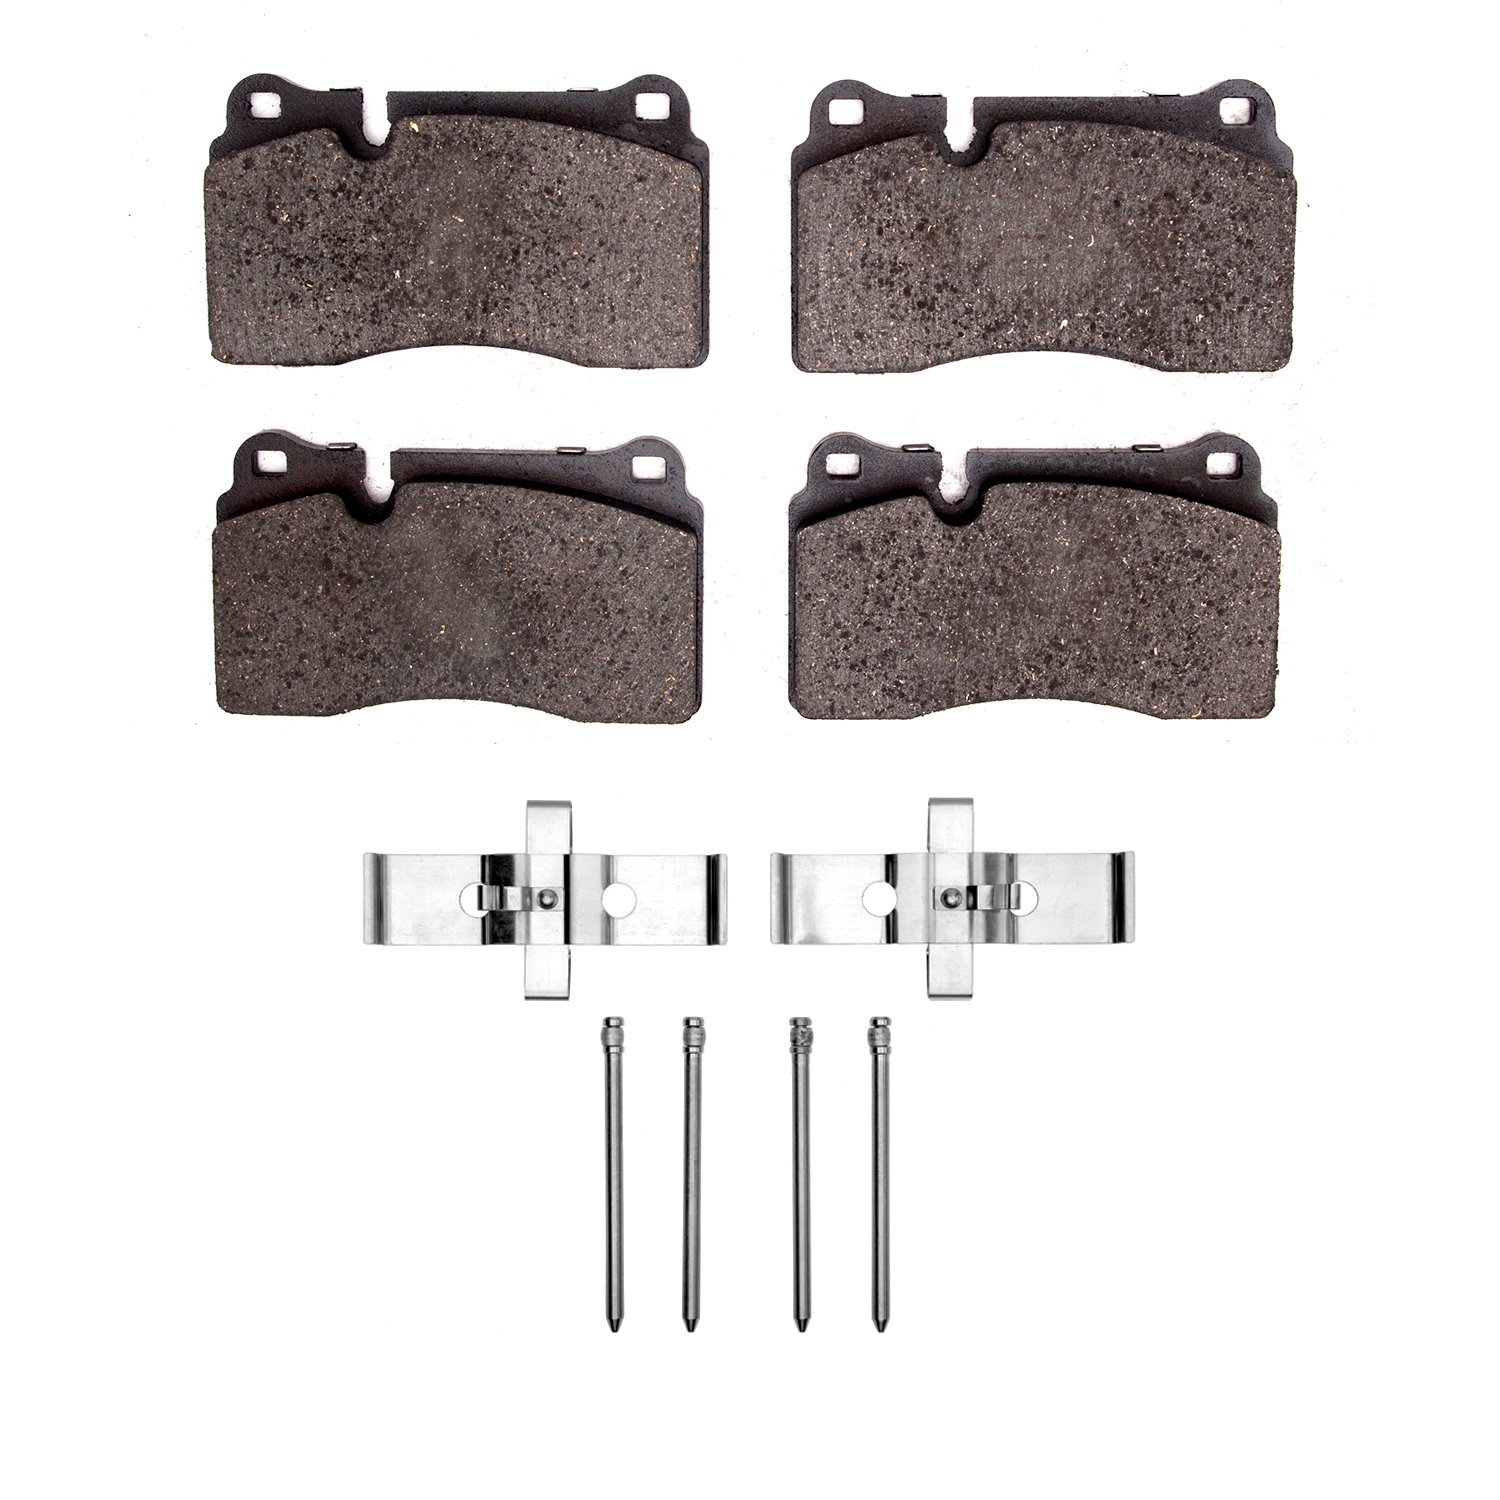 Semi-Metallic Brake Pads & Hardware Kit, 2006-2019 Fits Multiple Makes/Models, Position: Front & Rear